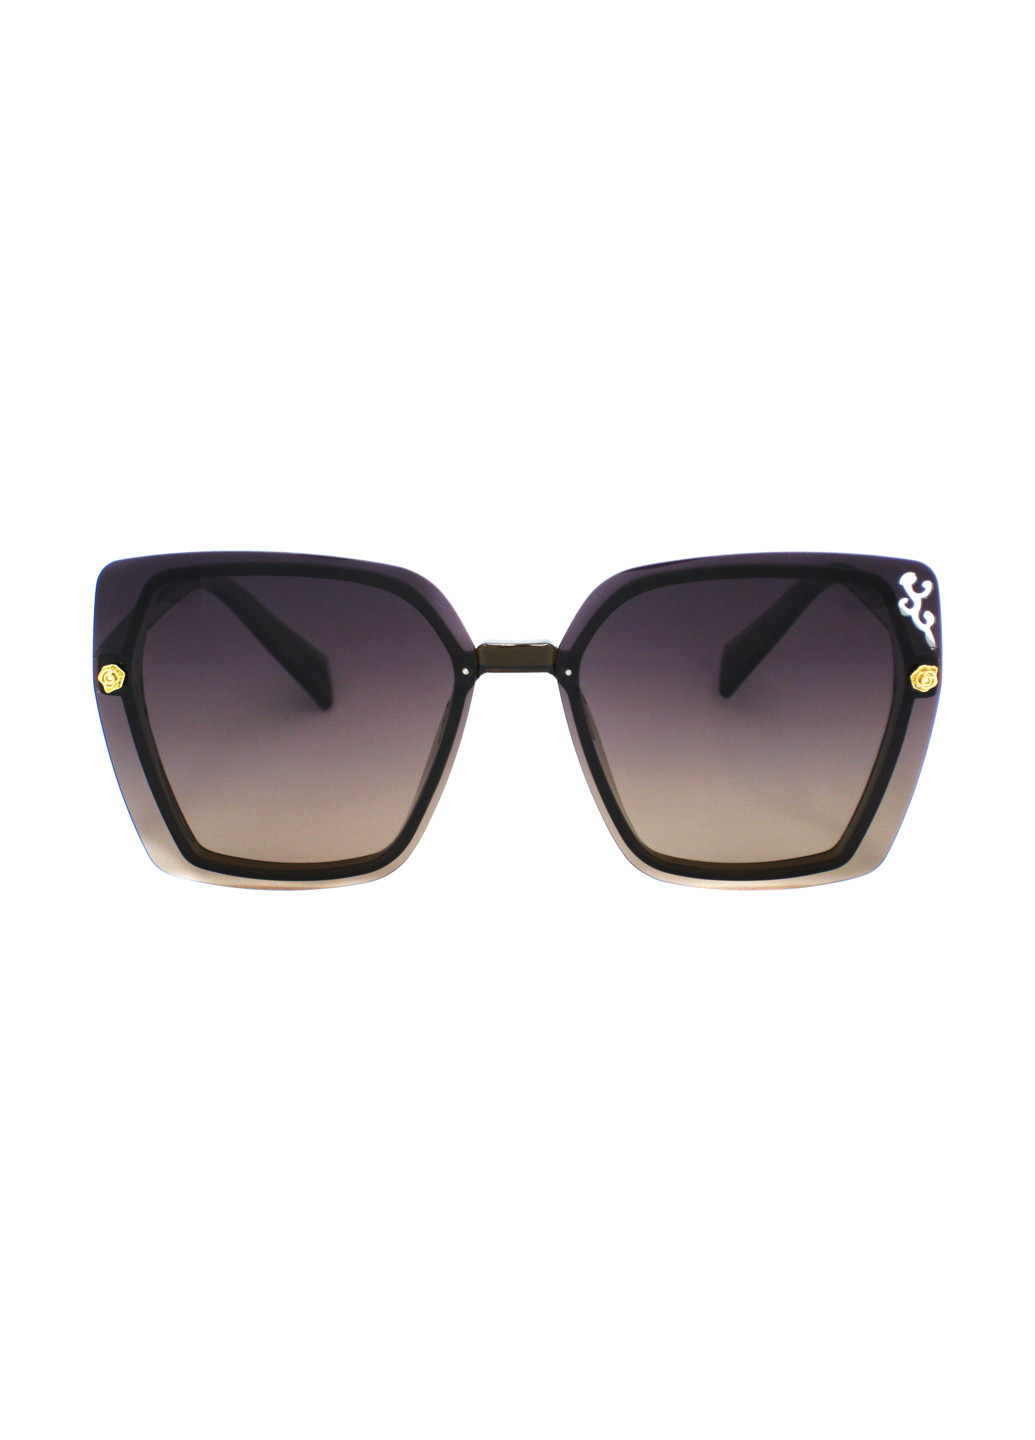 Cолнцезащітние окуляри Boccaccio bcp9956 05 (188291456)